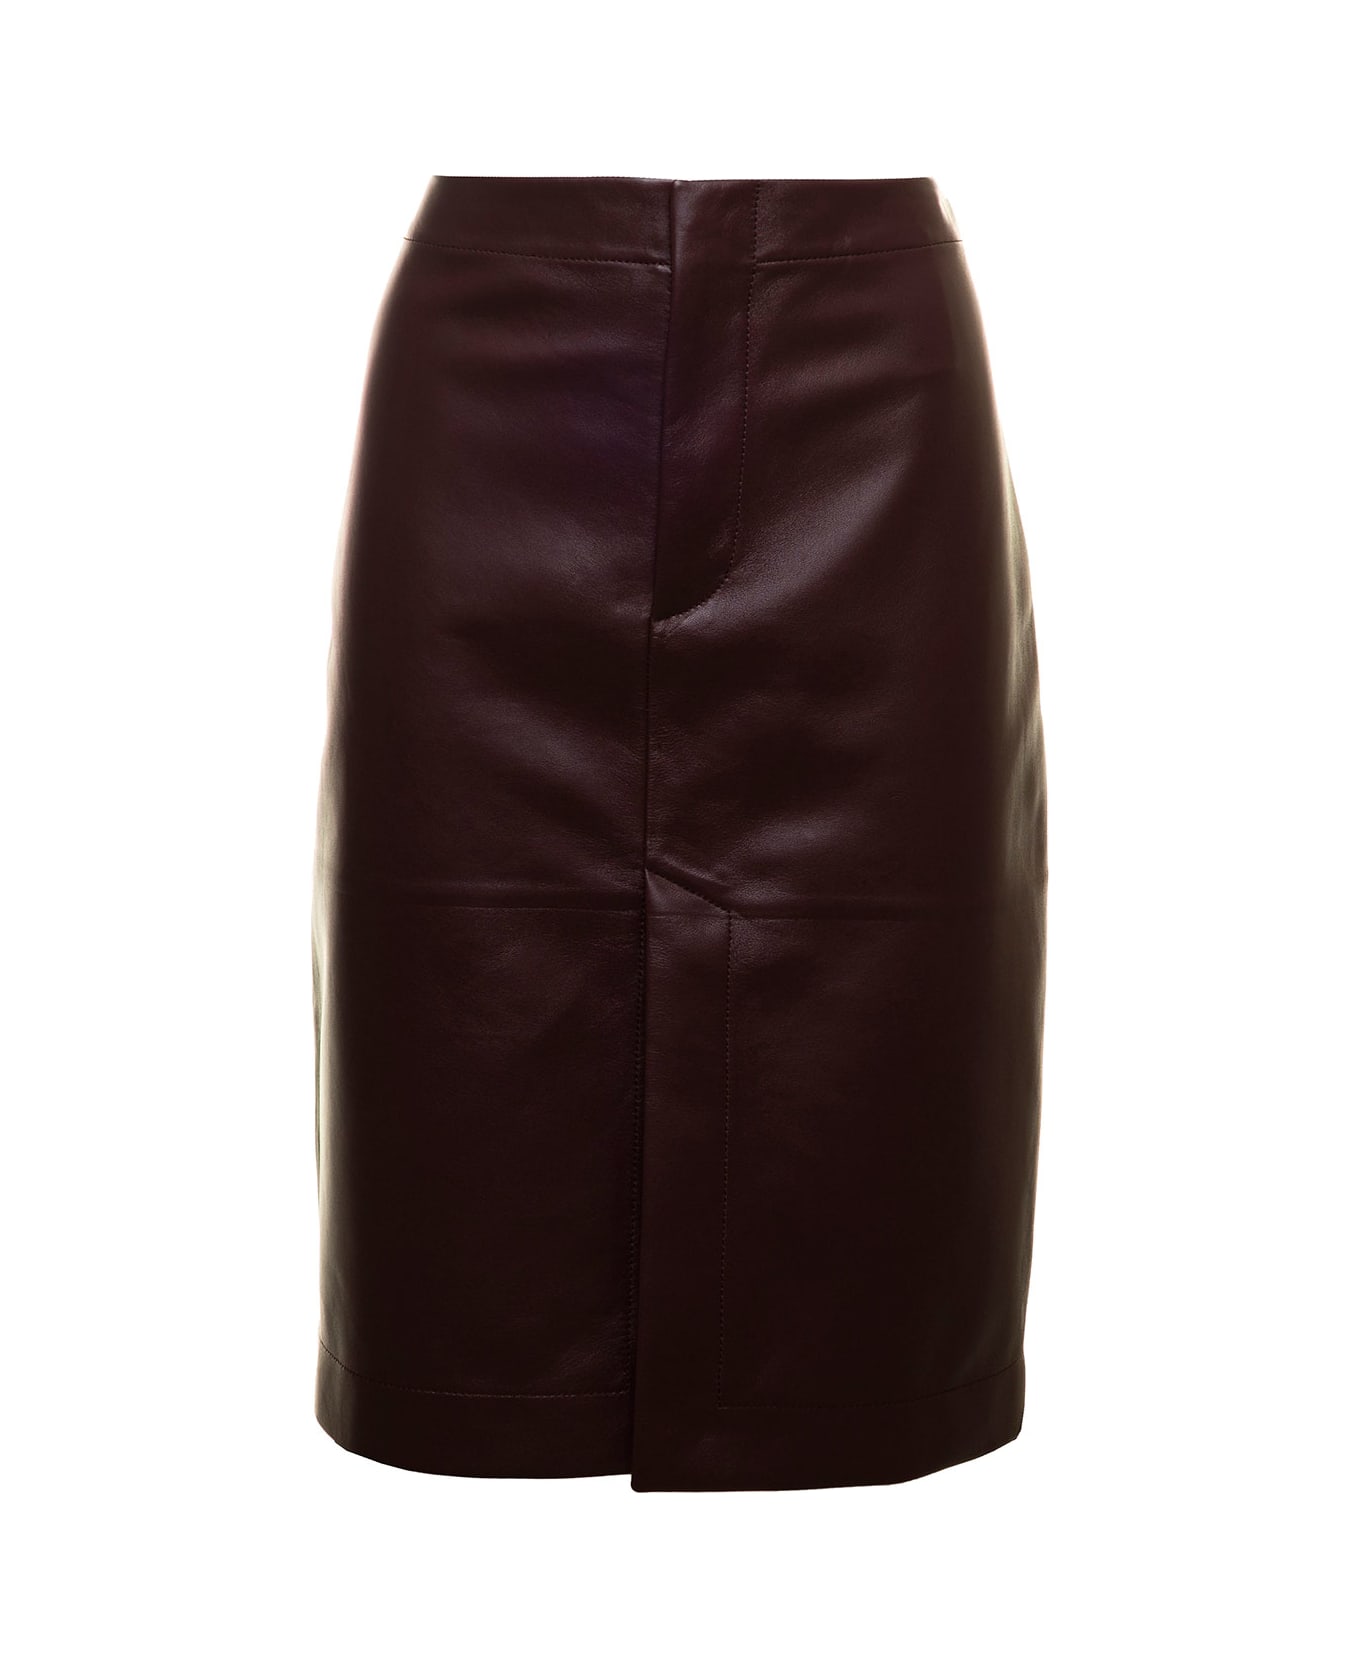 Bottega Veneta Pencil Leather Skirt - Bordeaux